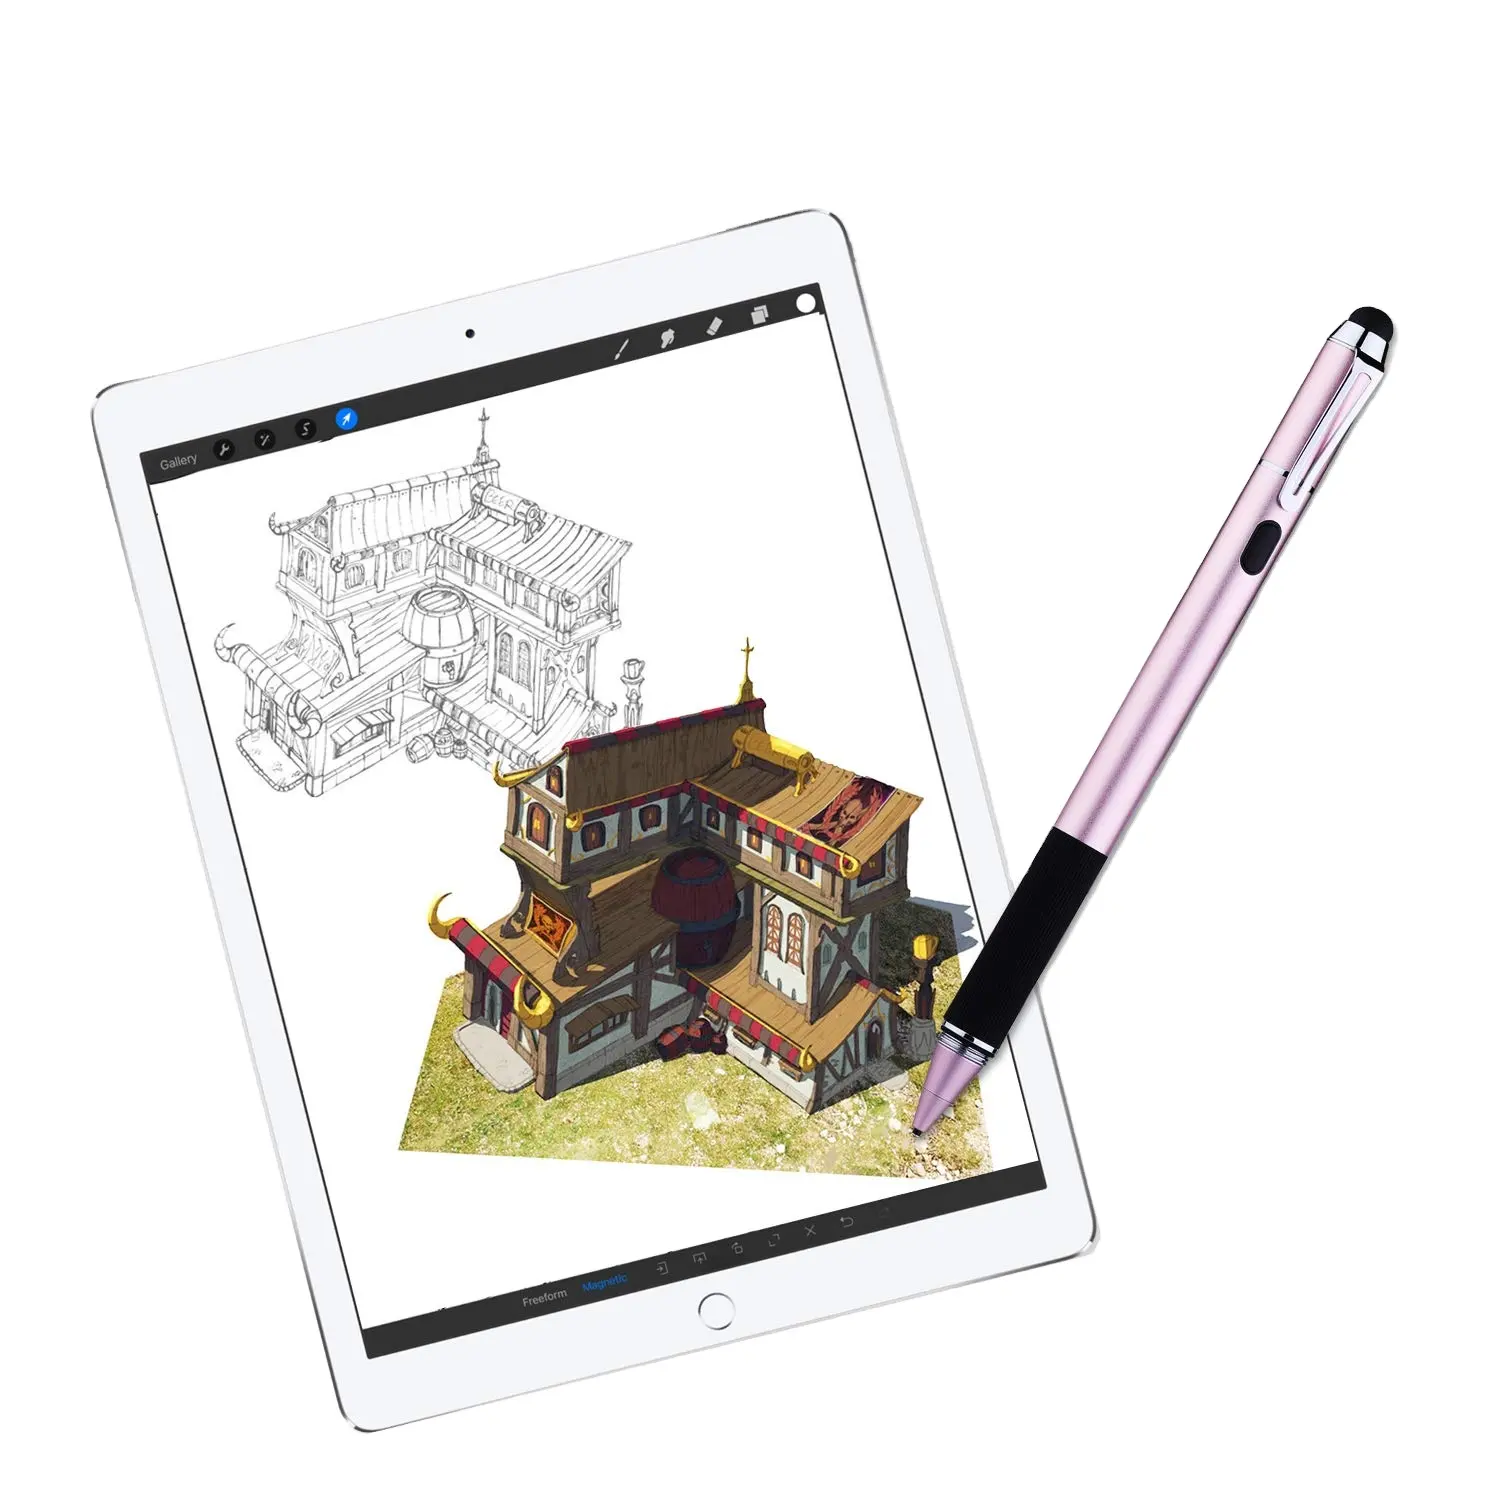 Universal Active Touch Graphic Palm Rejection 2 in 1 penna stilo con punta in rame puro per iPad per telefoni per Tablet PC